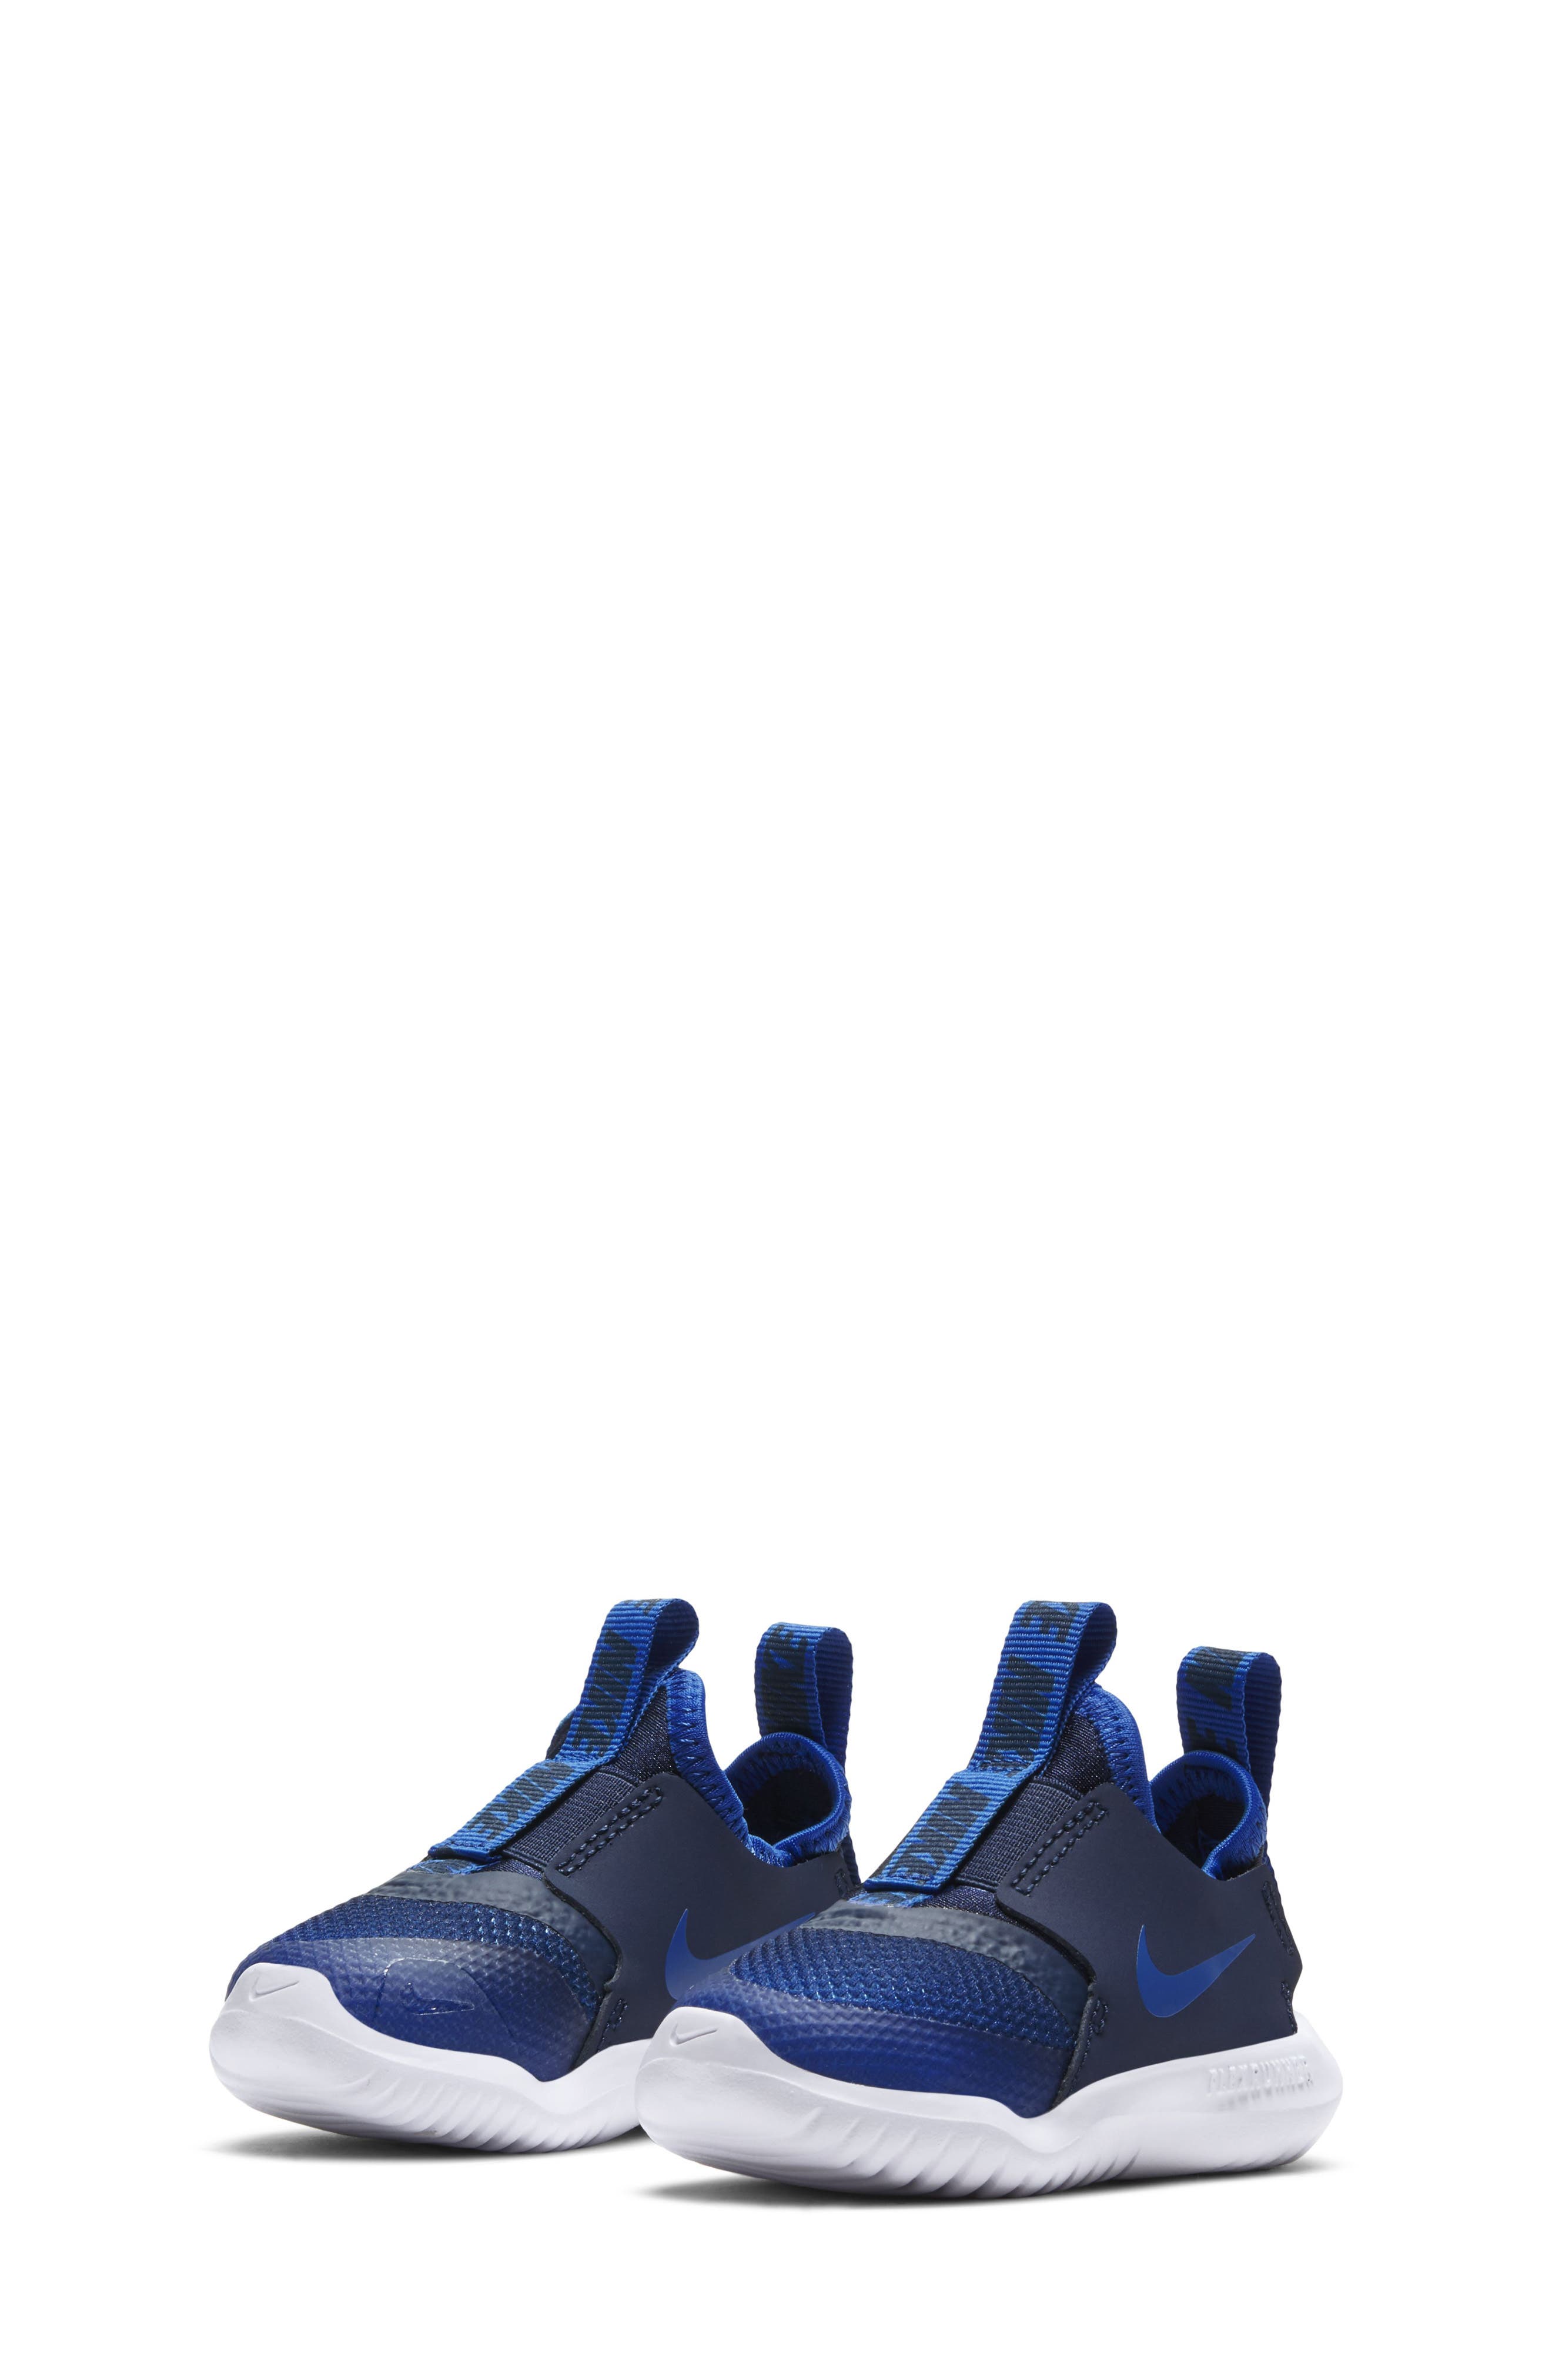 navy blue tennis shoes